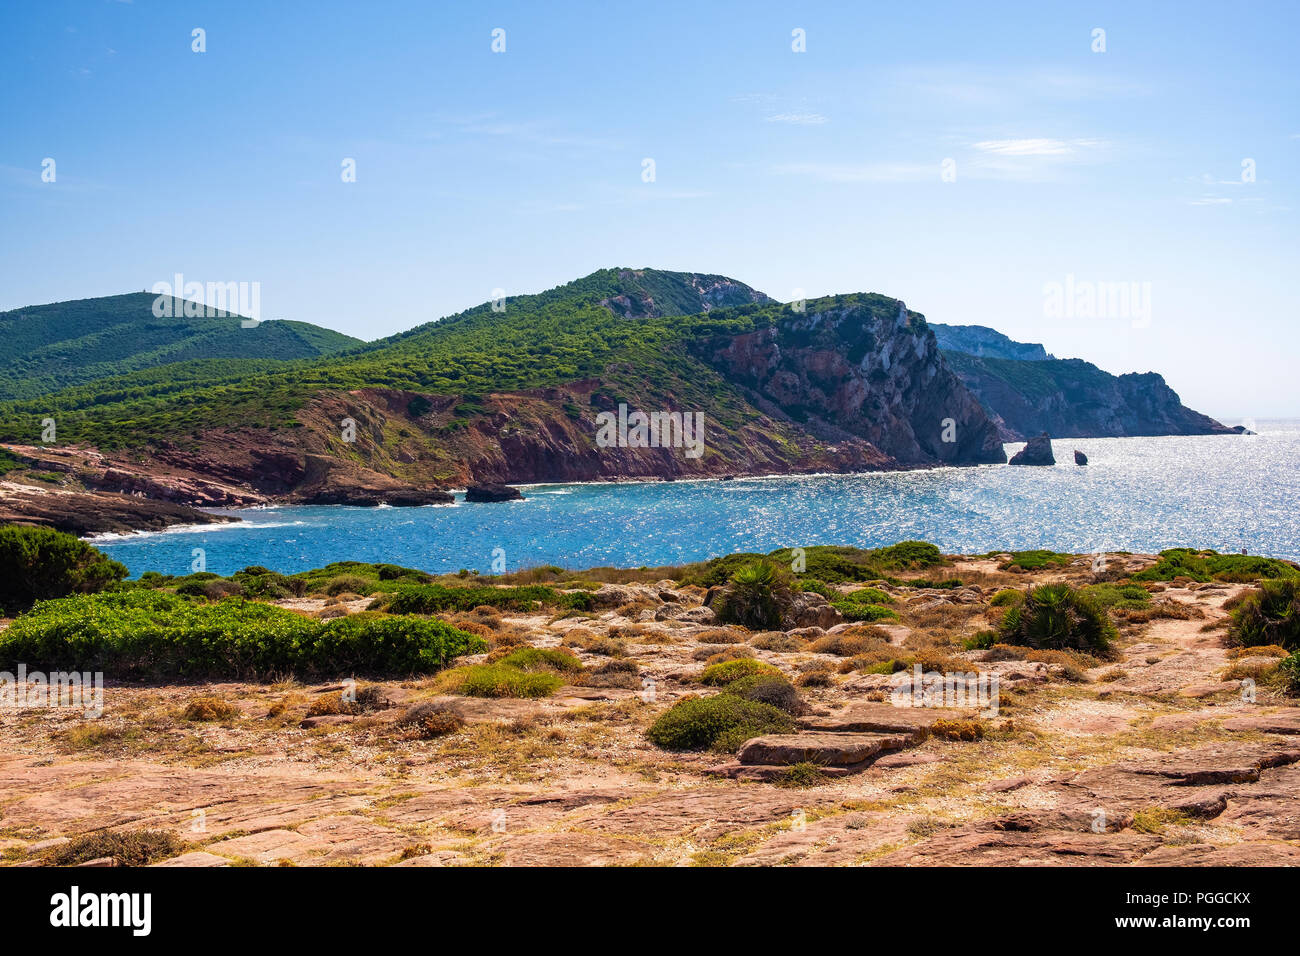 Alghero, Sardinia / Italy - 2018/08/11: Panoramic view of the Cala Porticciolo gulf with cliffs over the Cala Viola gulf in the Porto Conte Regional P Stock Photo